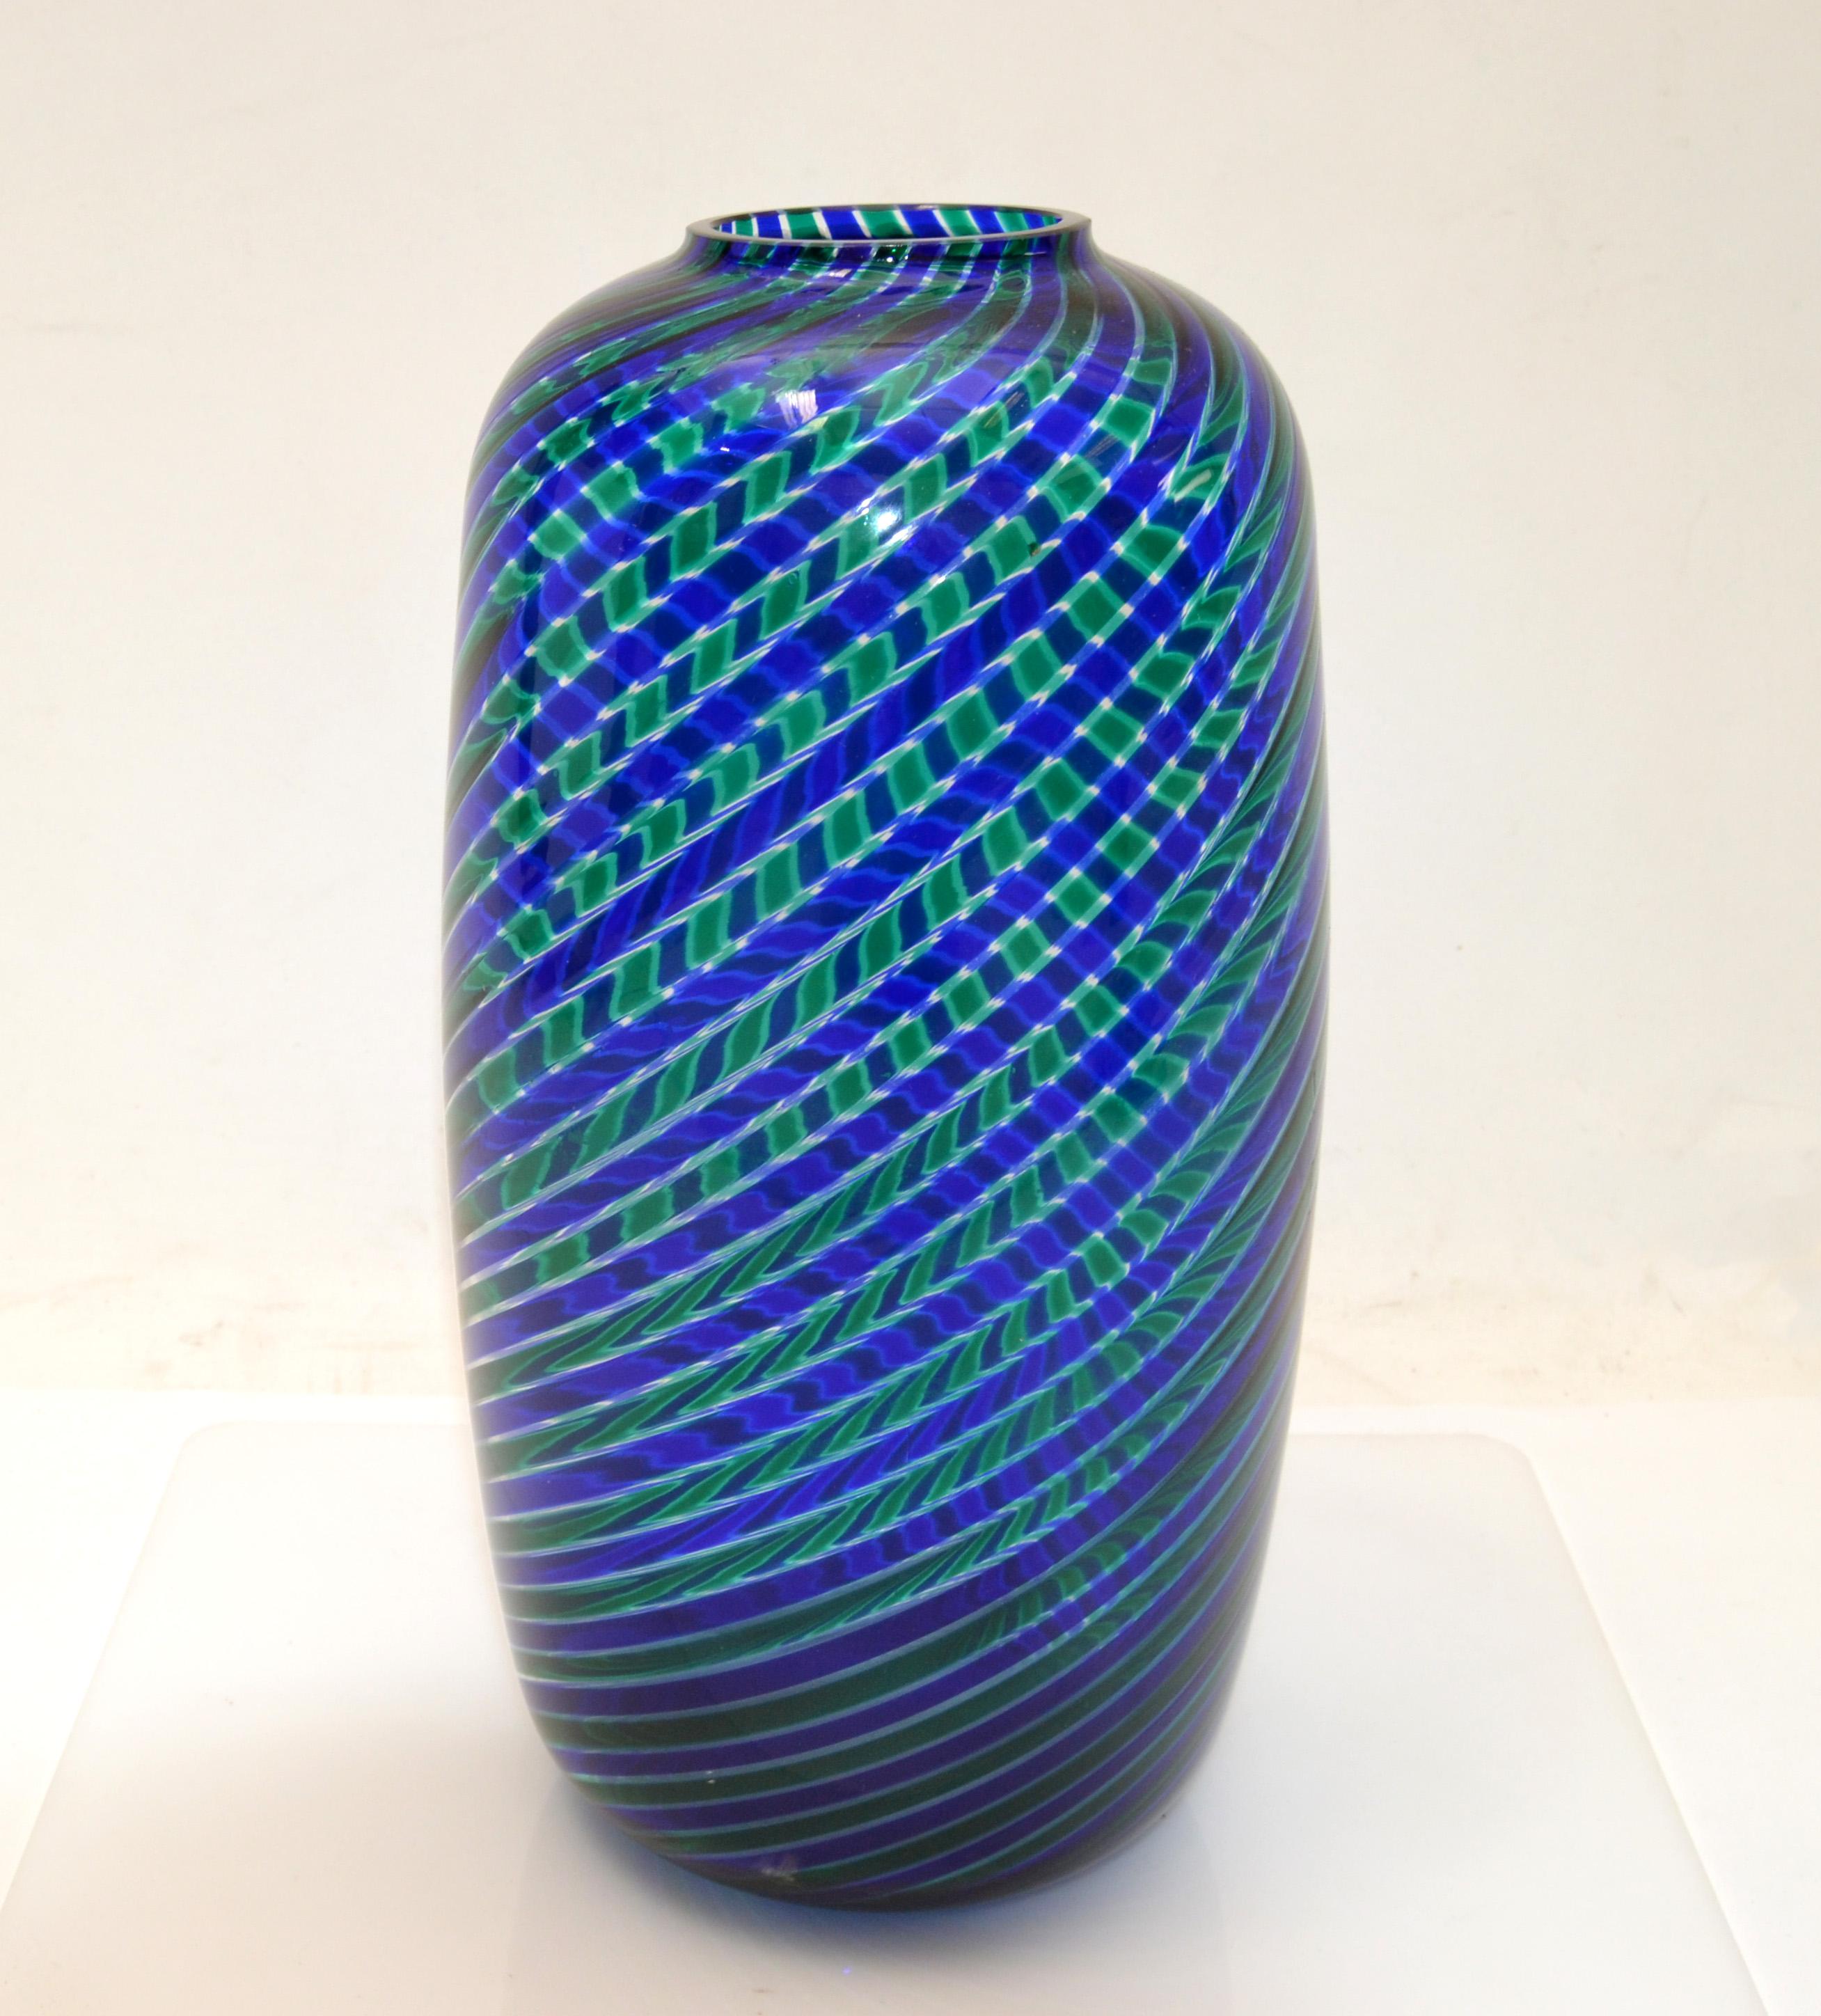 Venini Bulgarov 1970 engraved blown blue & green striped Murano art glass vase. 
Opening measures: 2 inches diameter.
Italian Art Glass par excellence.